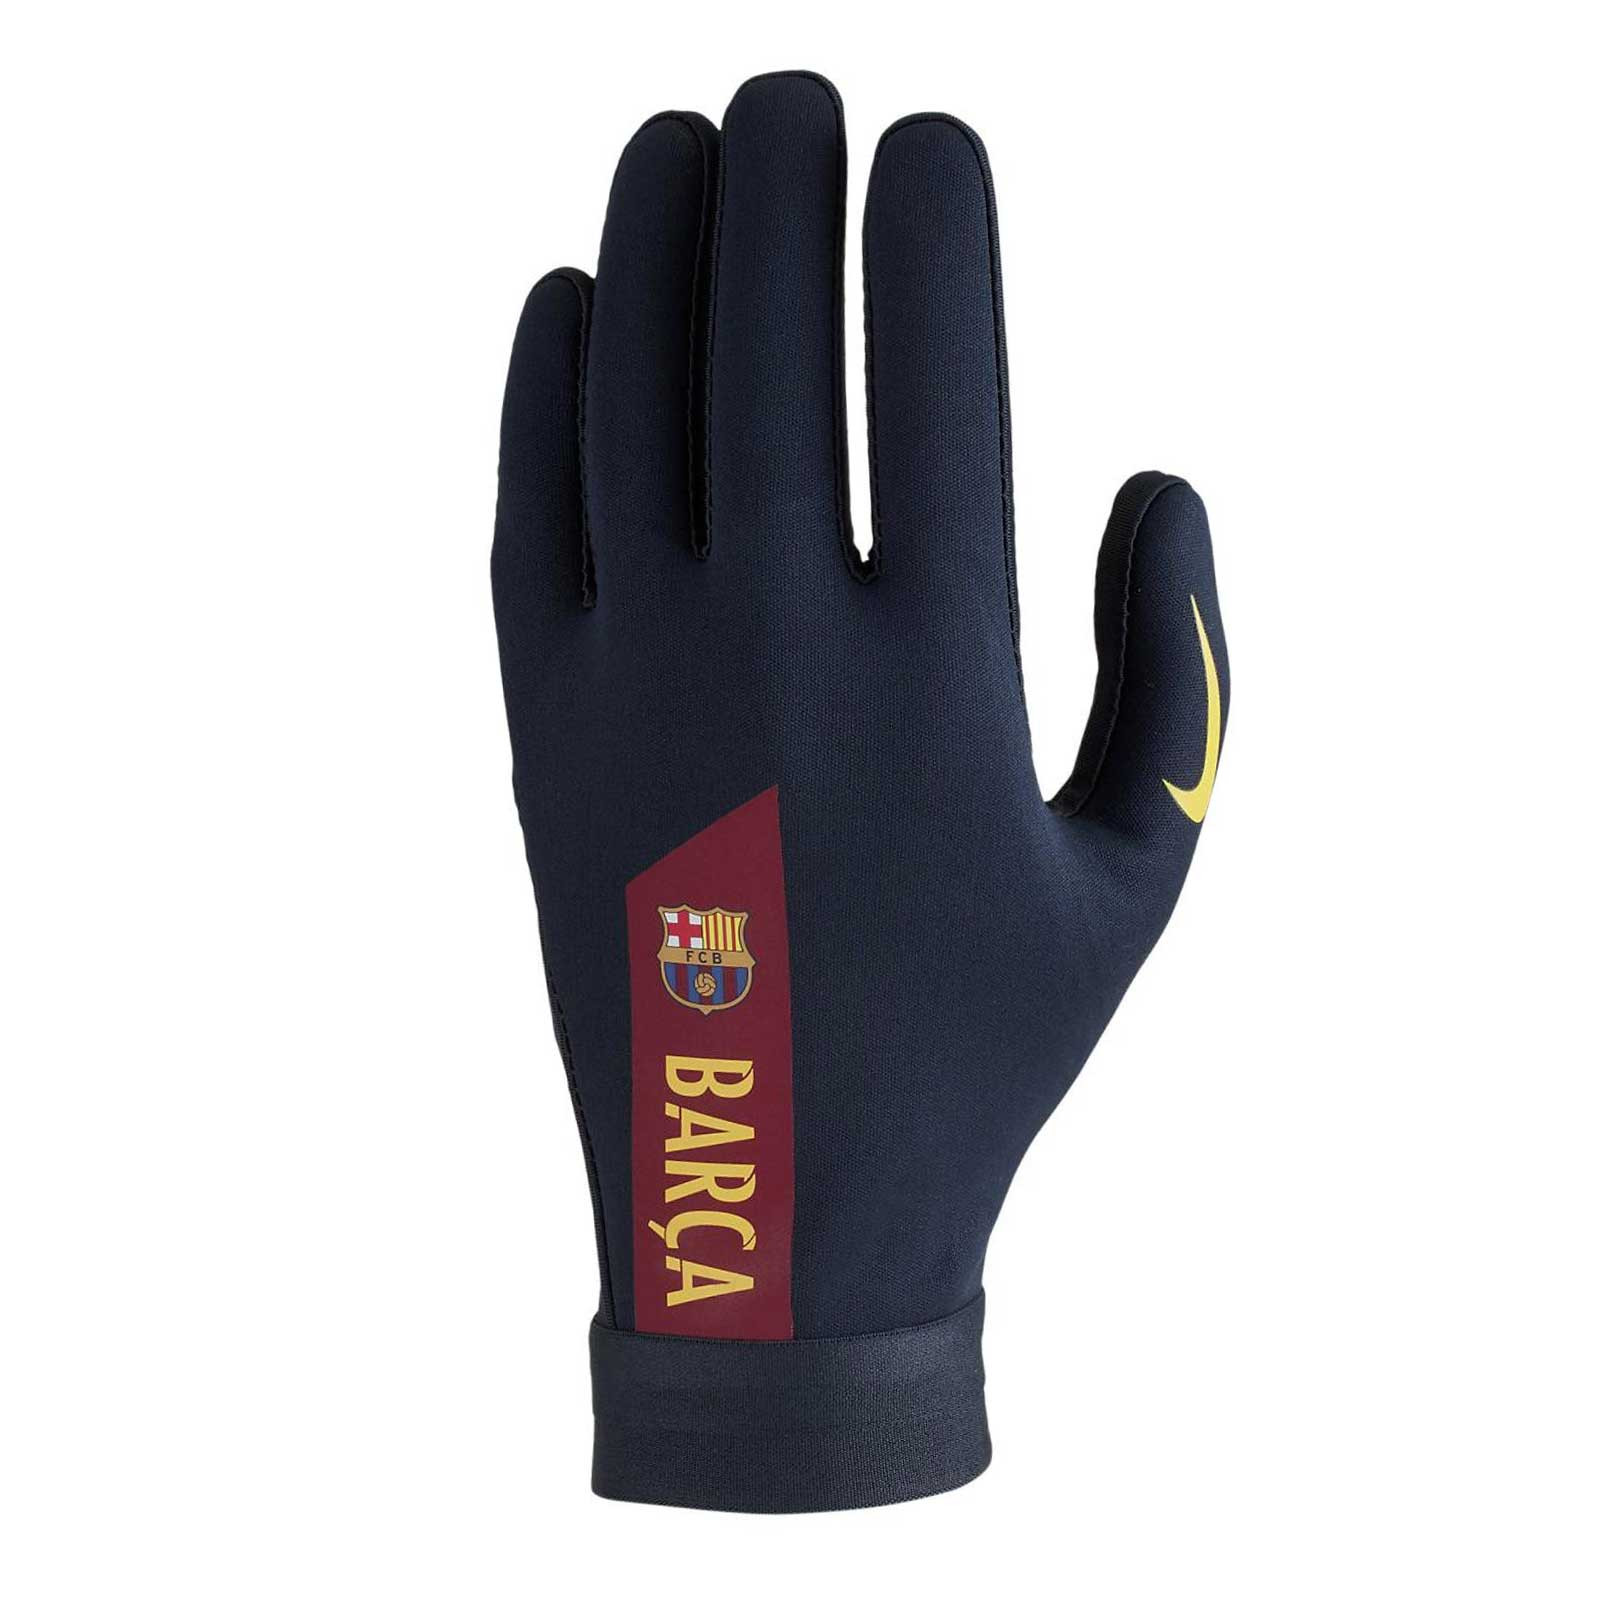 guantes nike futbol baratas